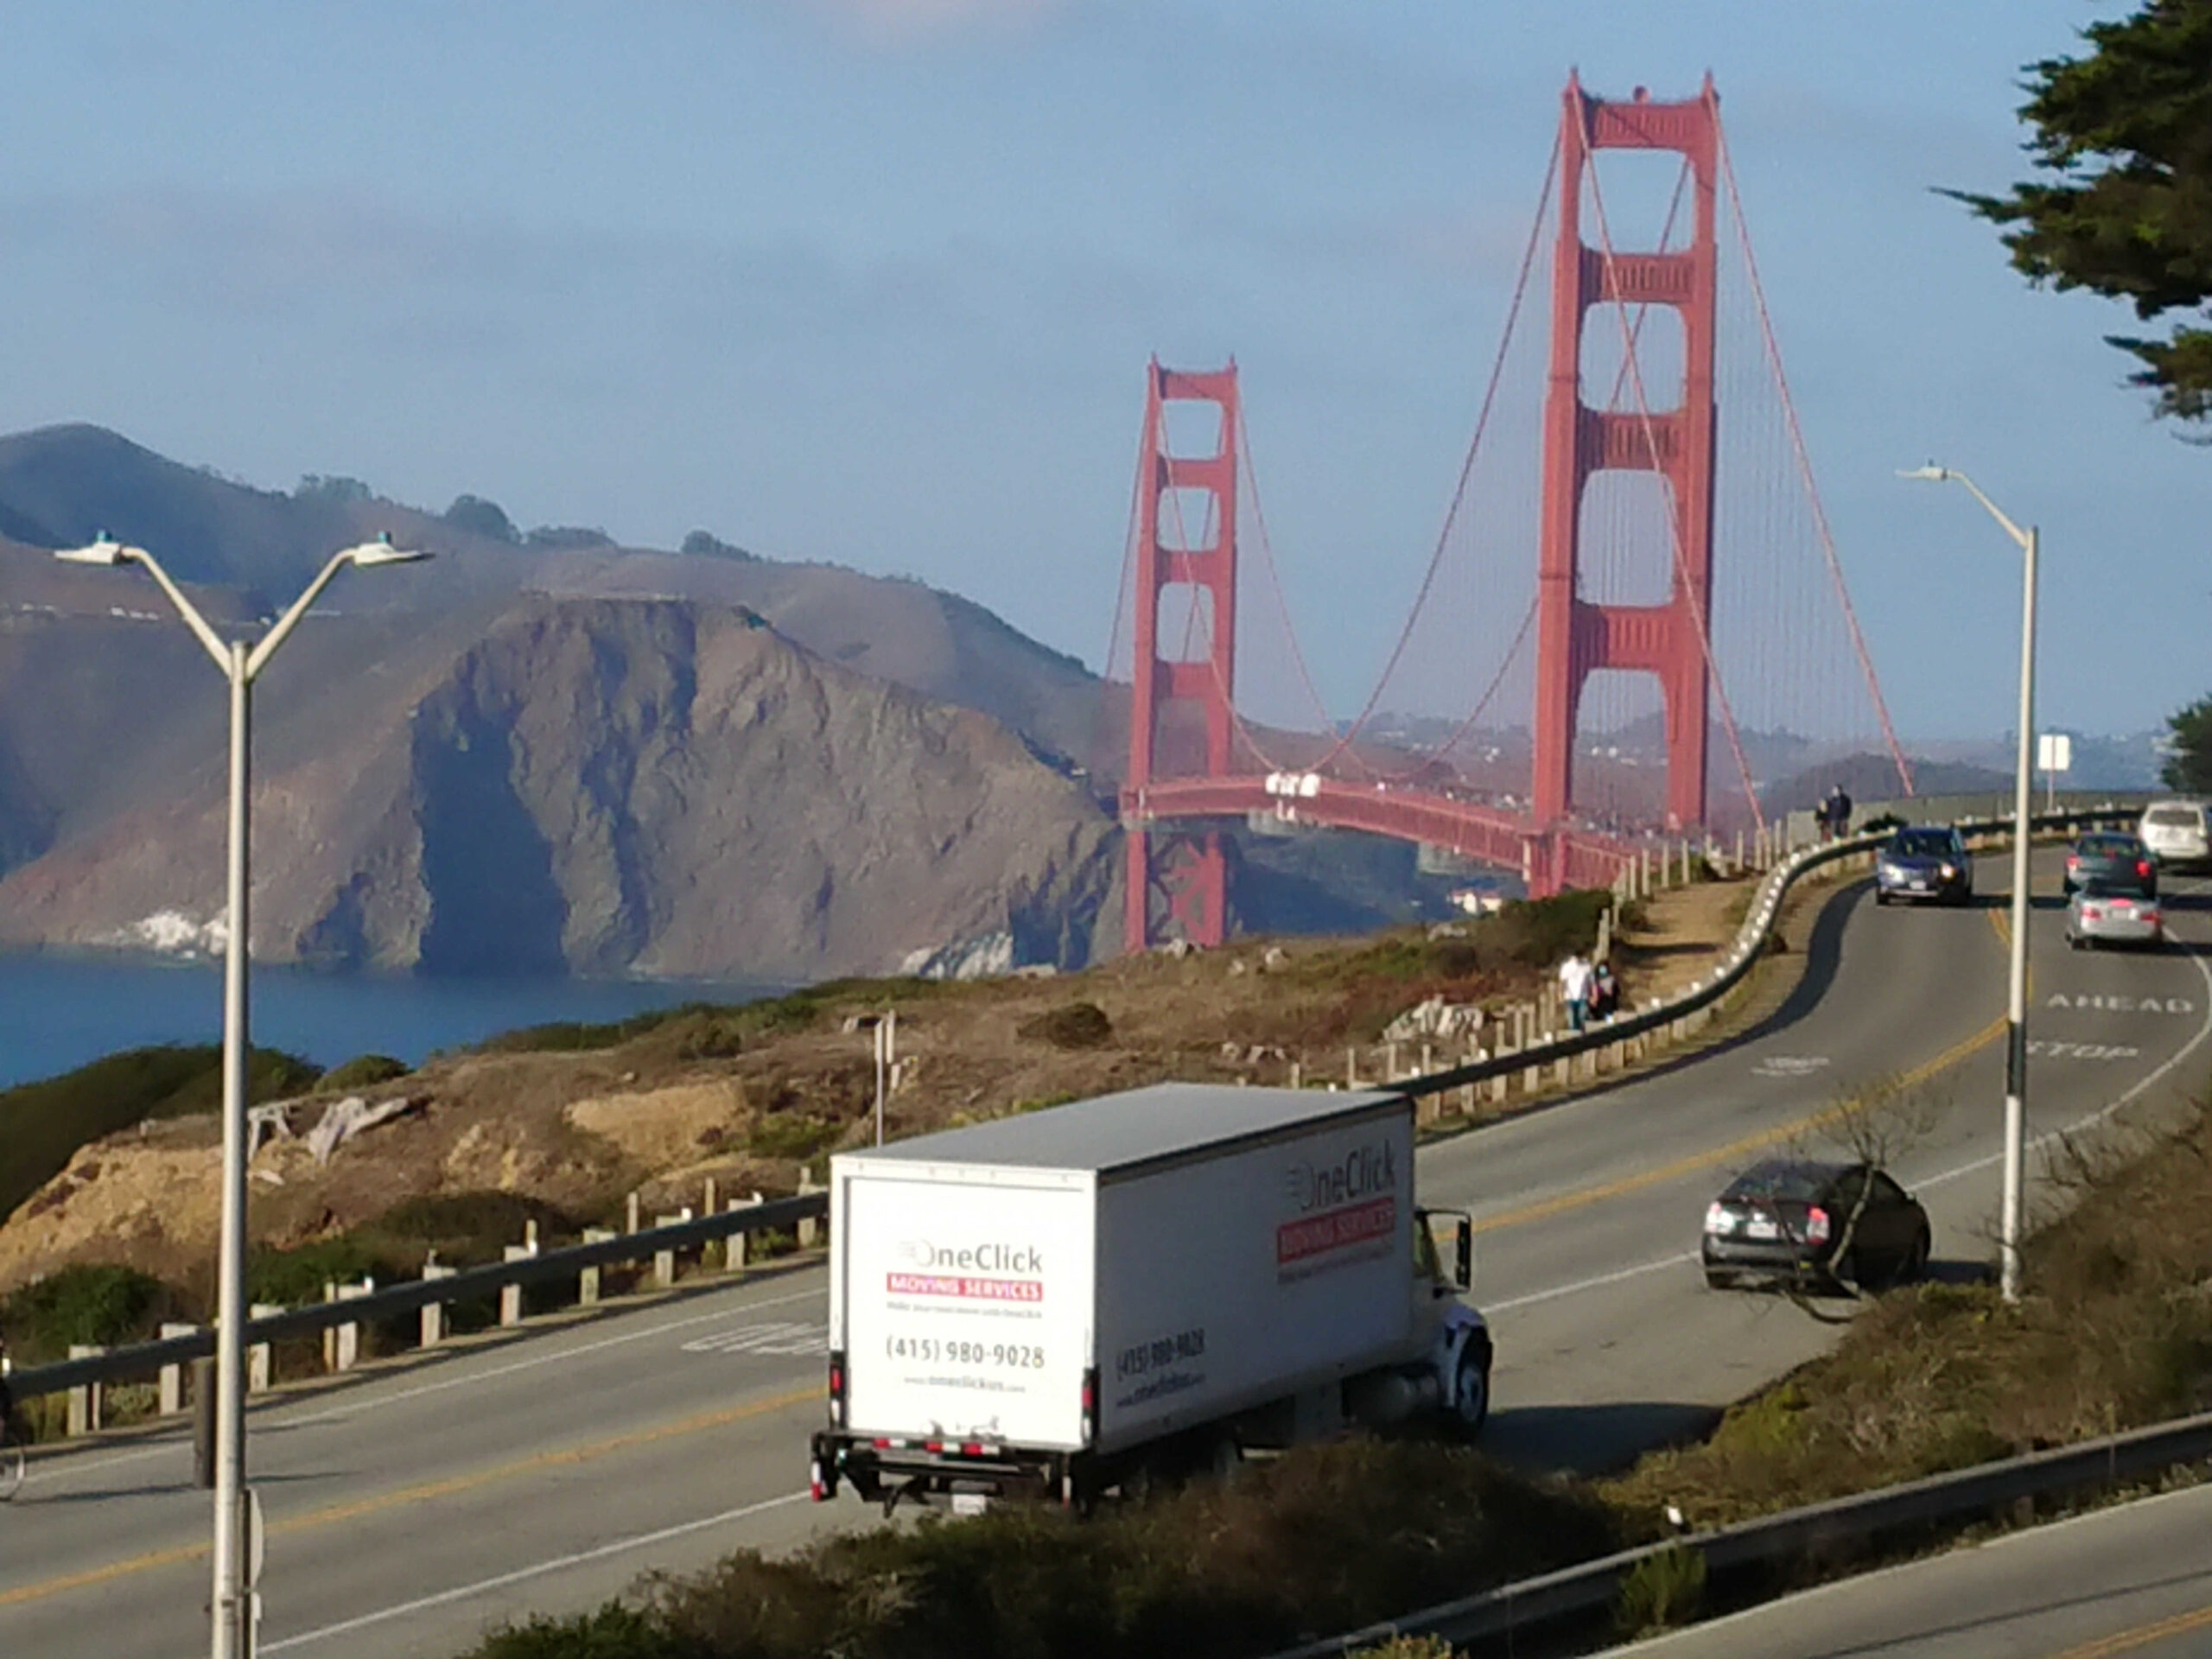 Moving Company in San Francisco & Bay Area